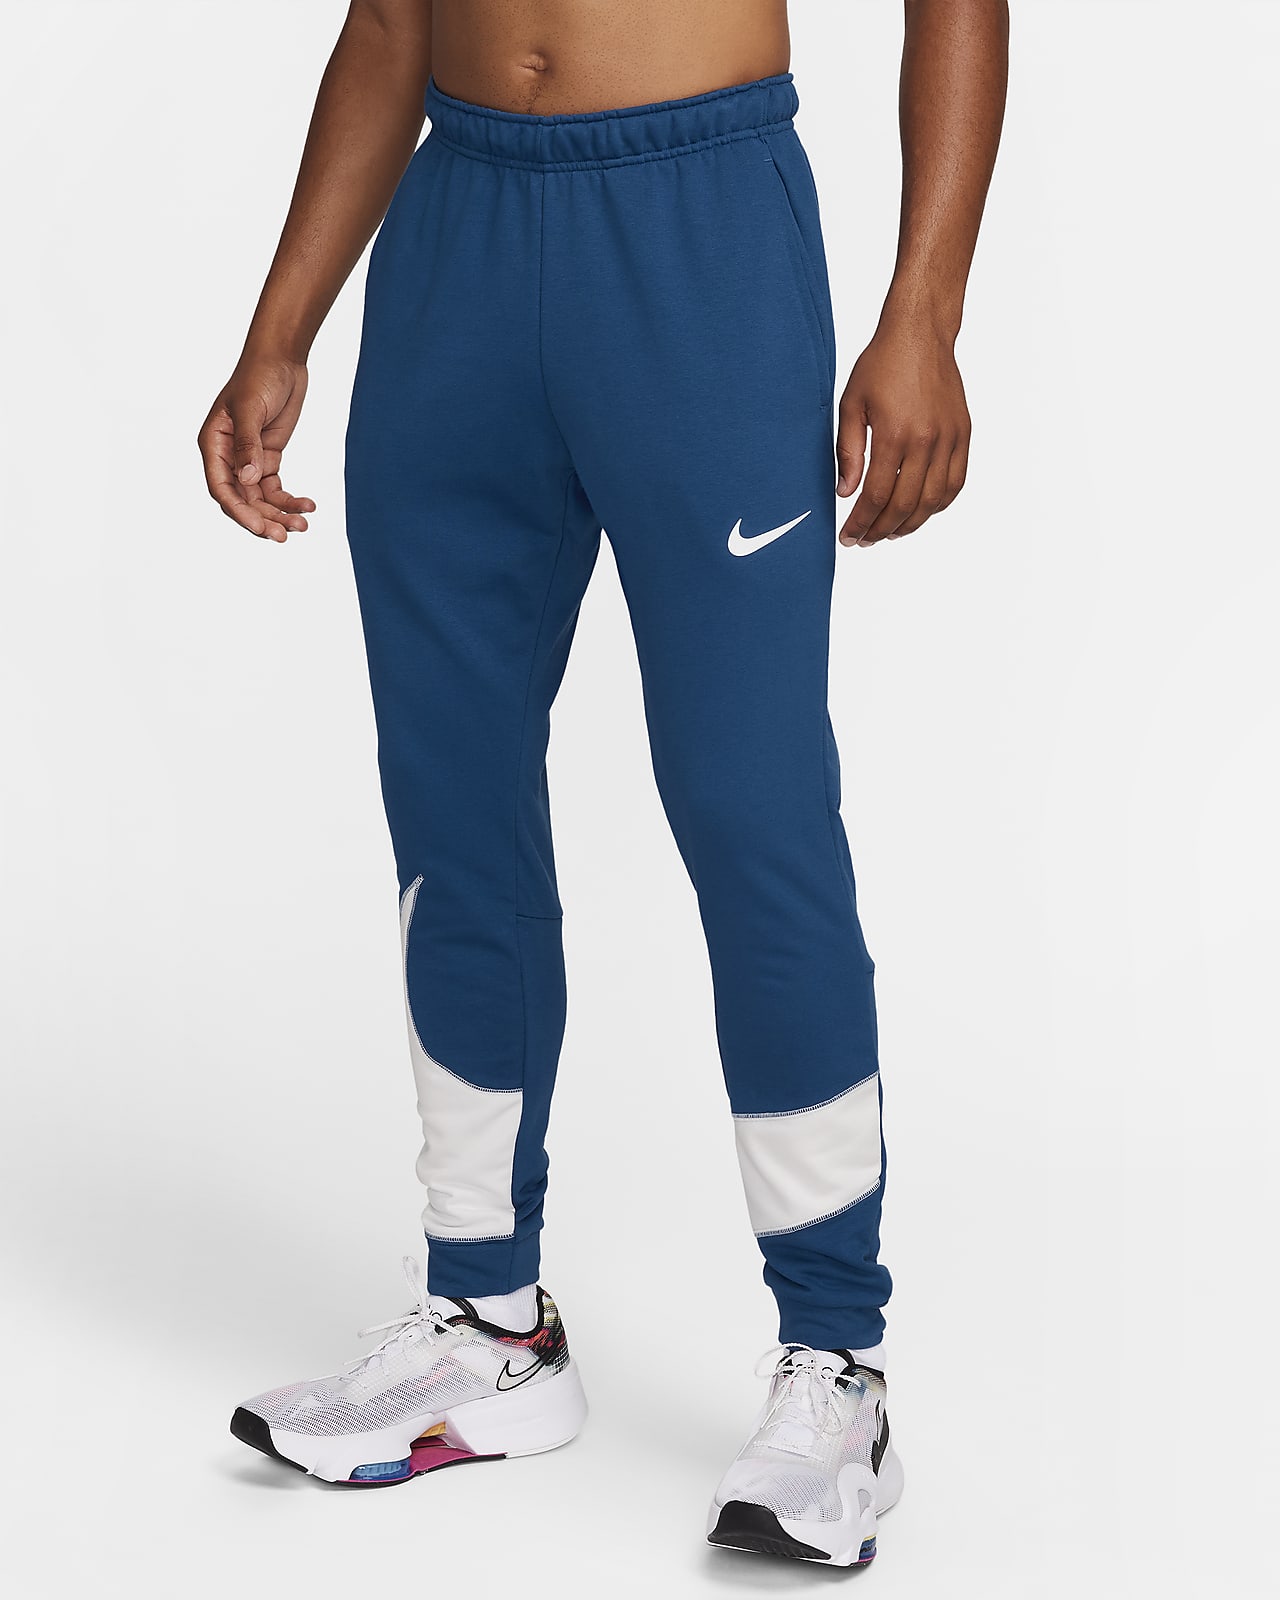 Nike Dri-FIT Men's Tapered Fitness Trousers